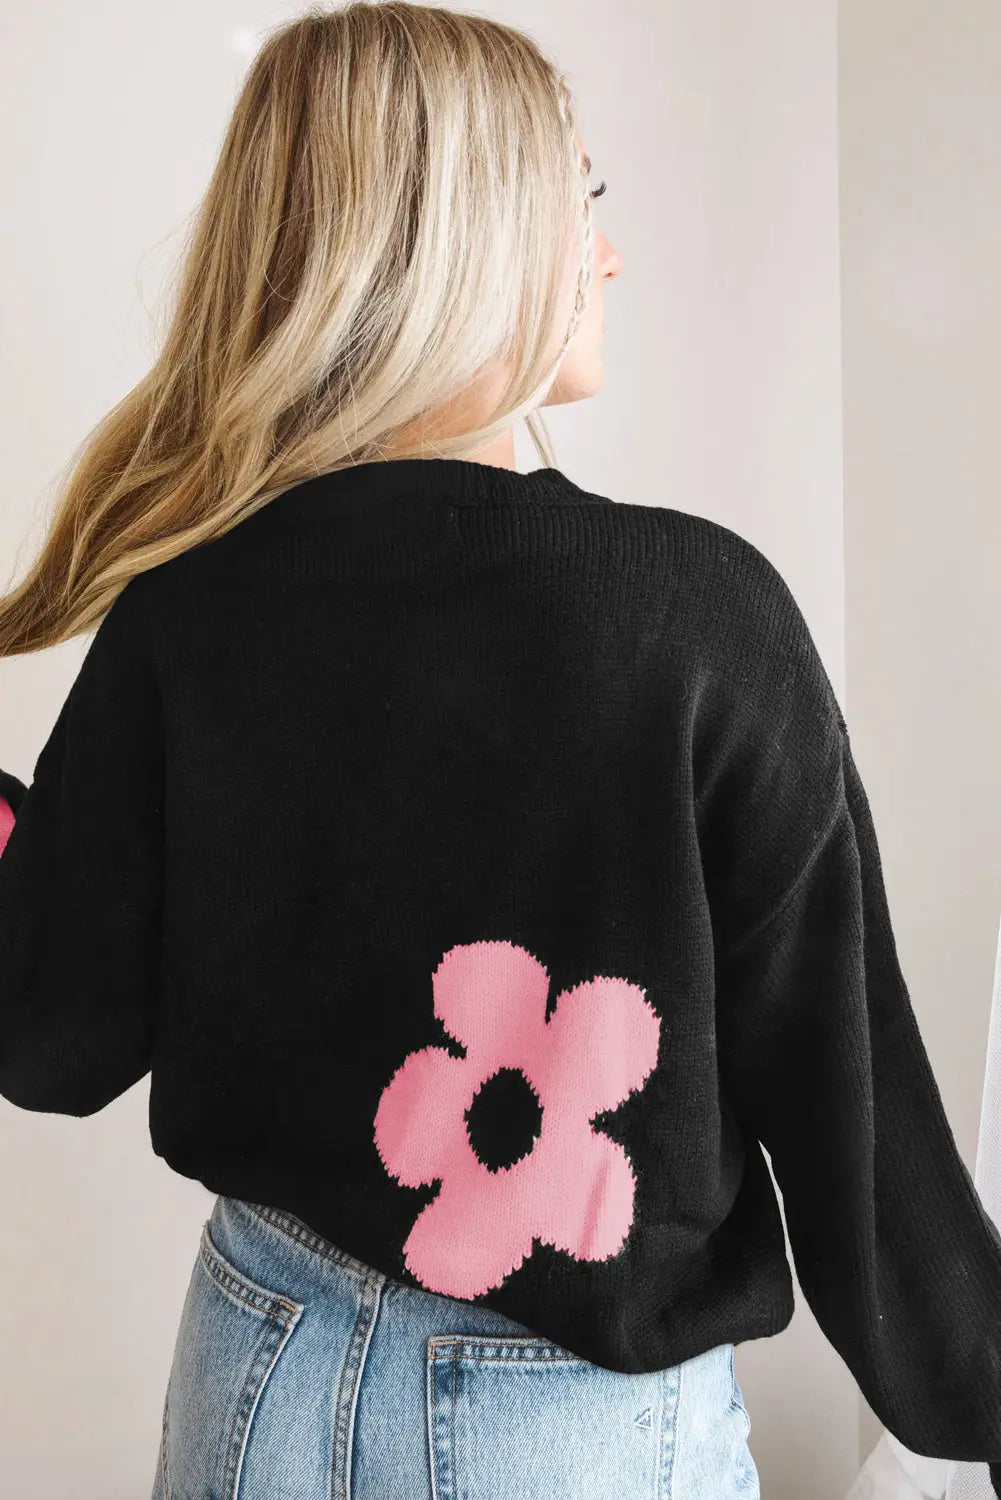 Camel flower pattern slouchy sweater - sweaters & cardigans